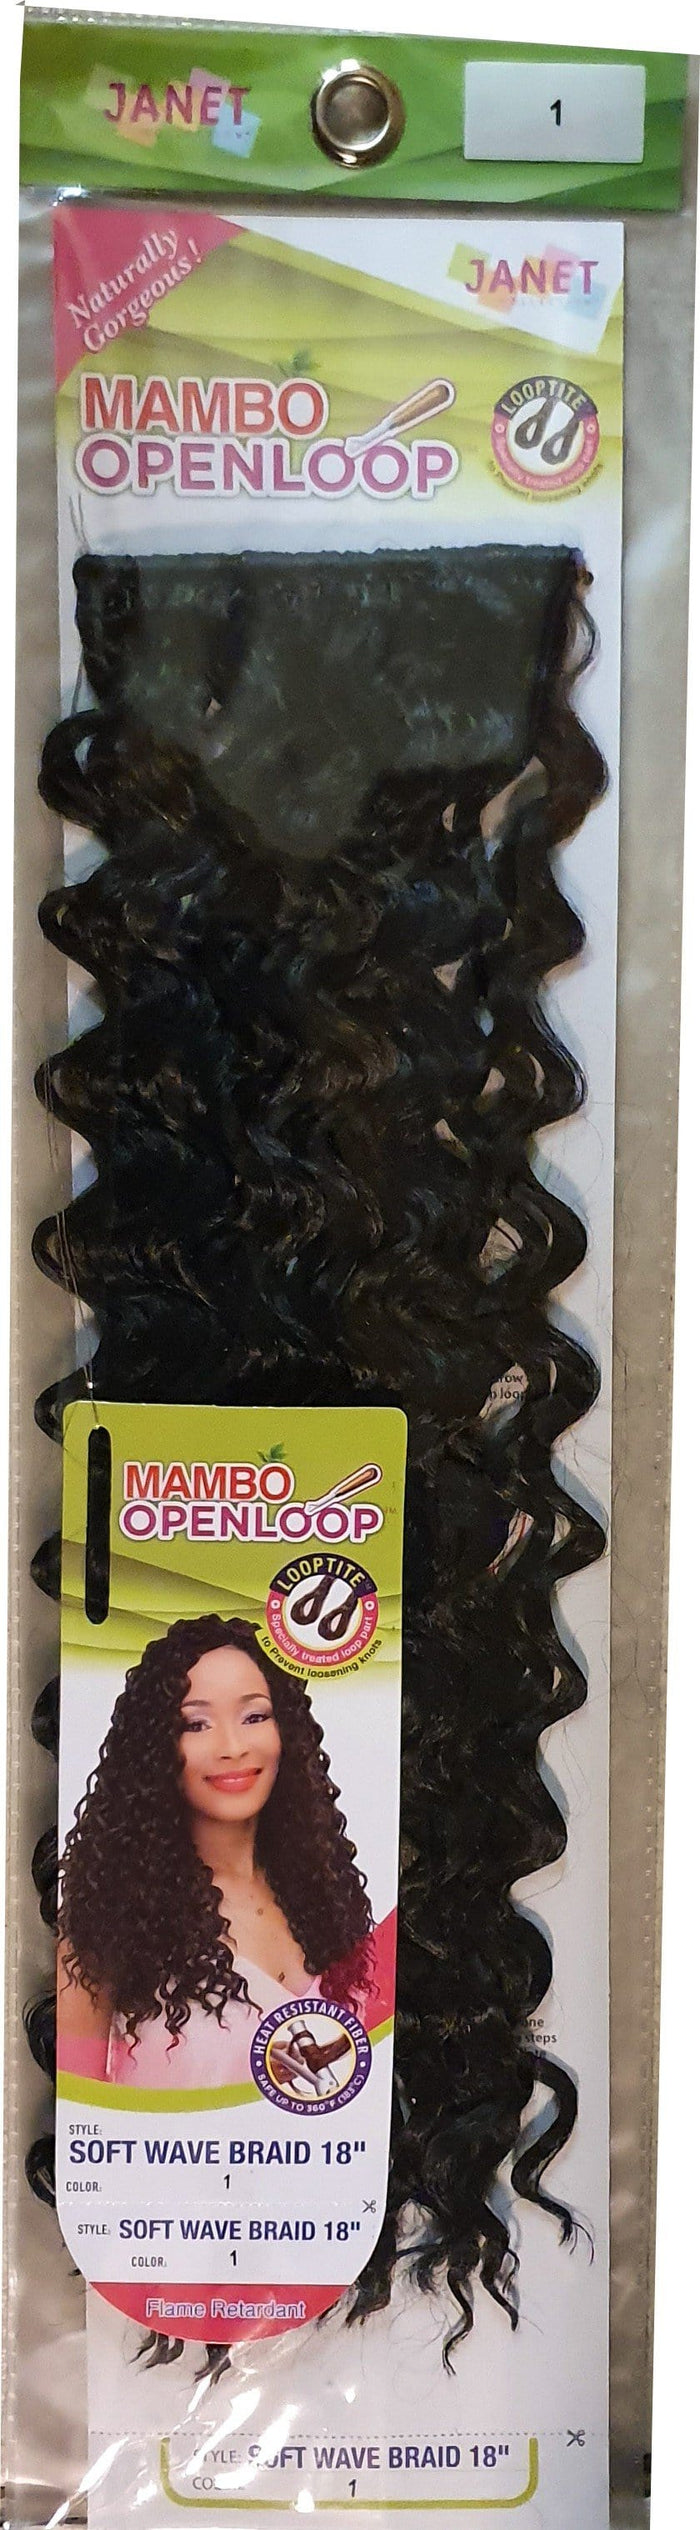 Janet Mambo Openloop Soft Wave Braid num 1 18 Inch